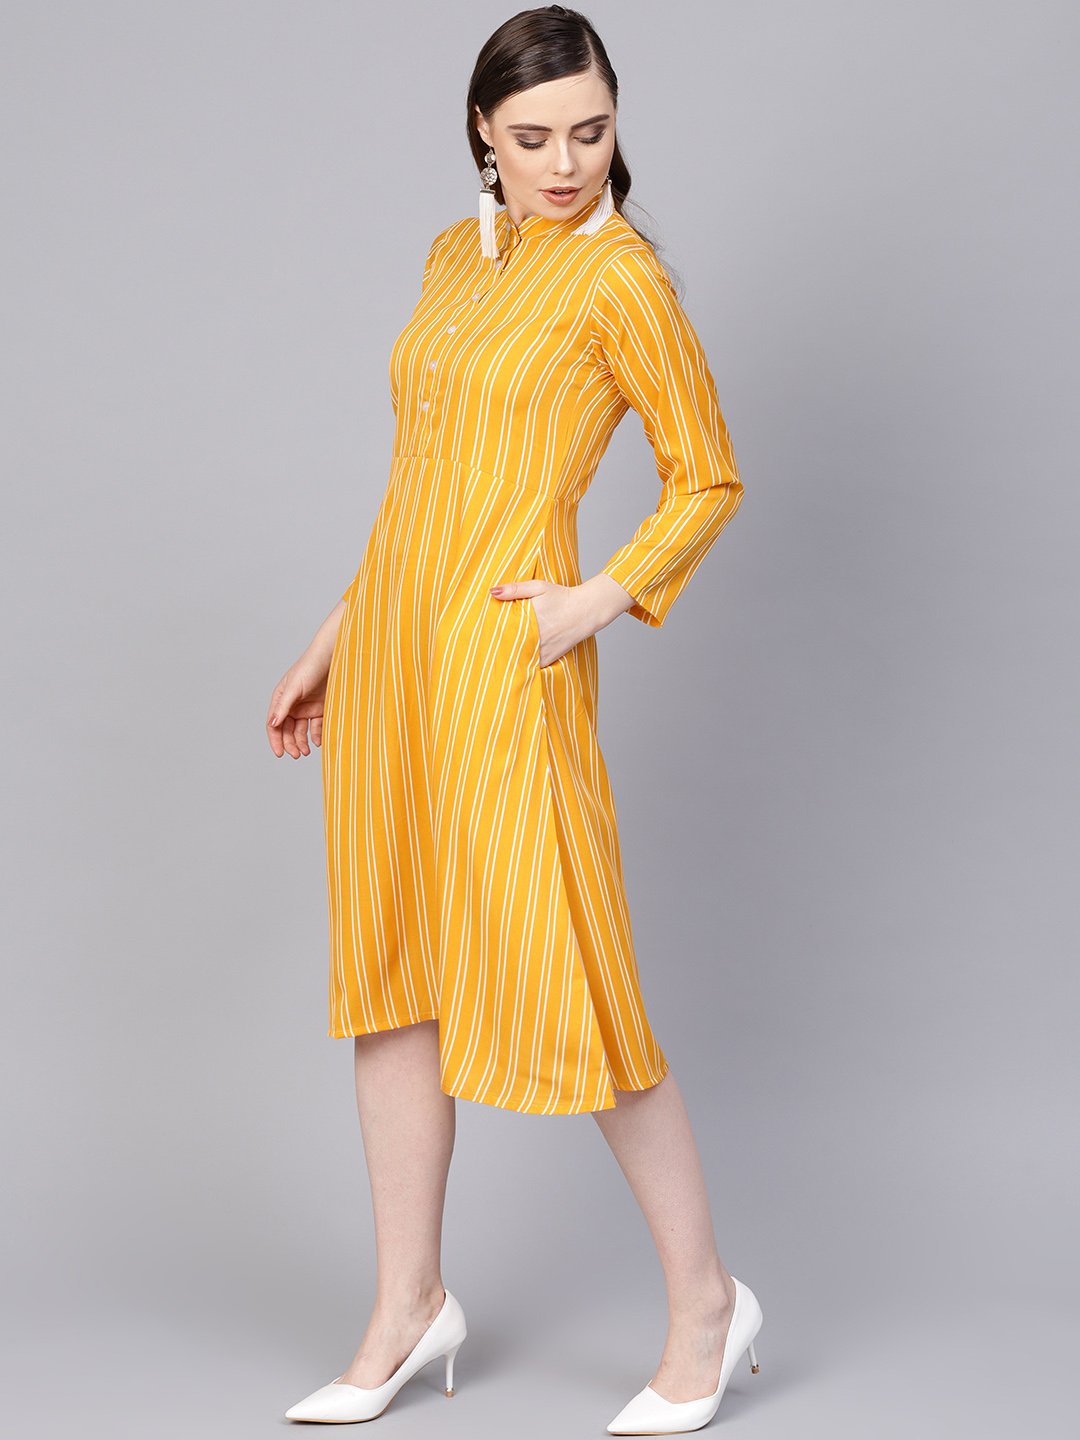 Women's Yellow & White Striped Dress With Madarin Collar & Full Sleeves - Nayo Clothing